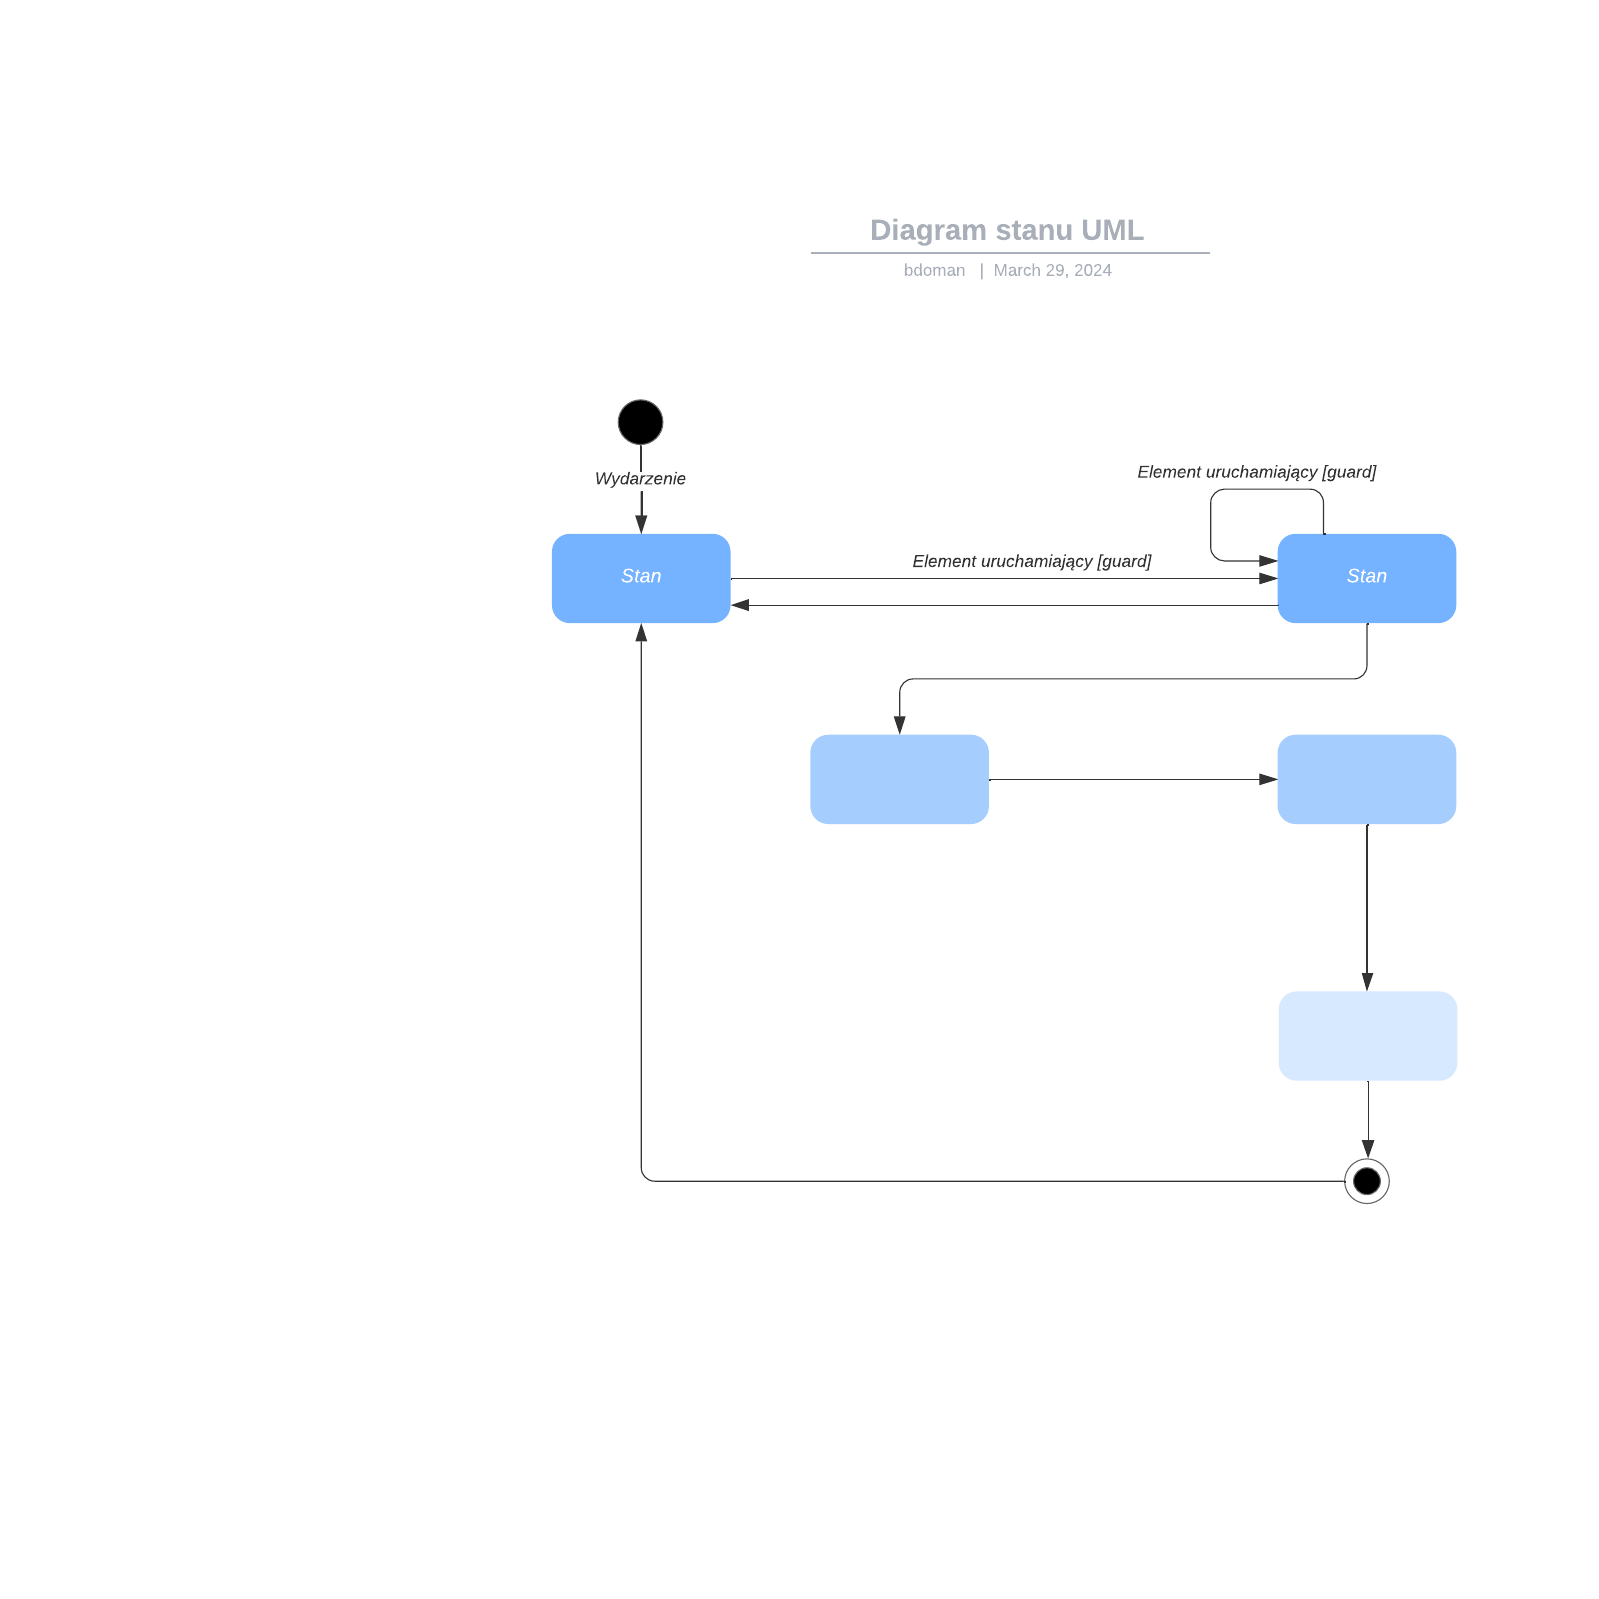 Diagram stanu UML example